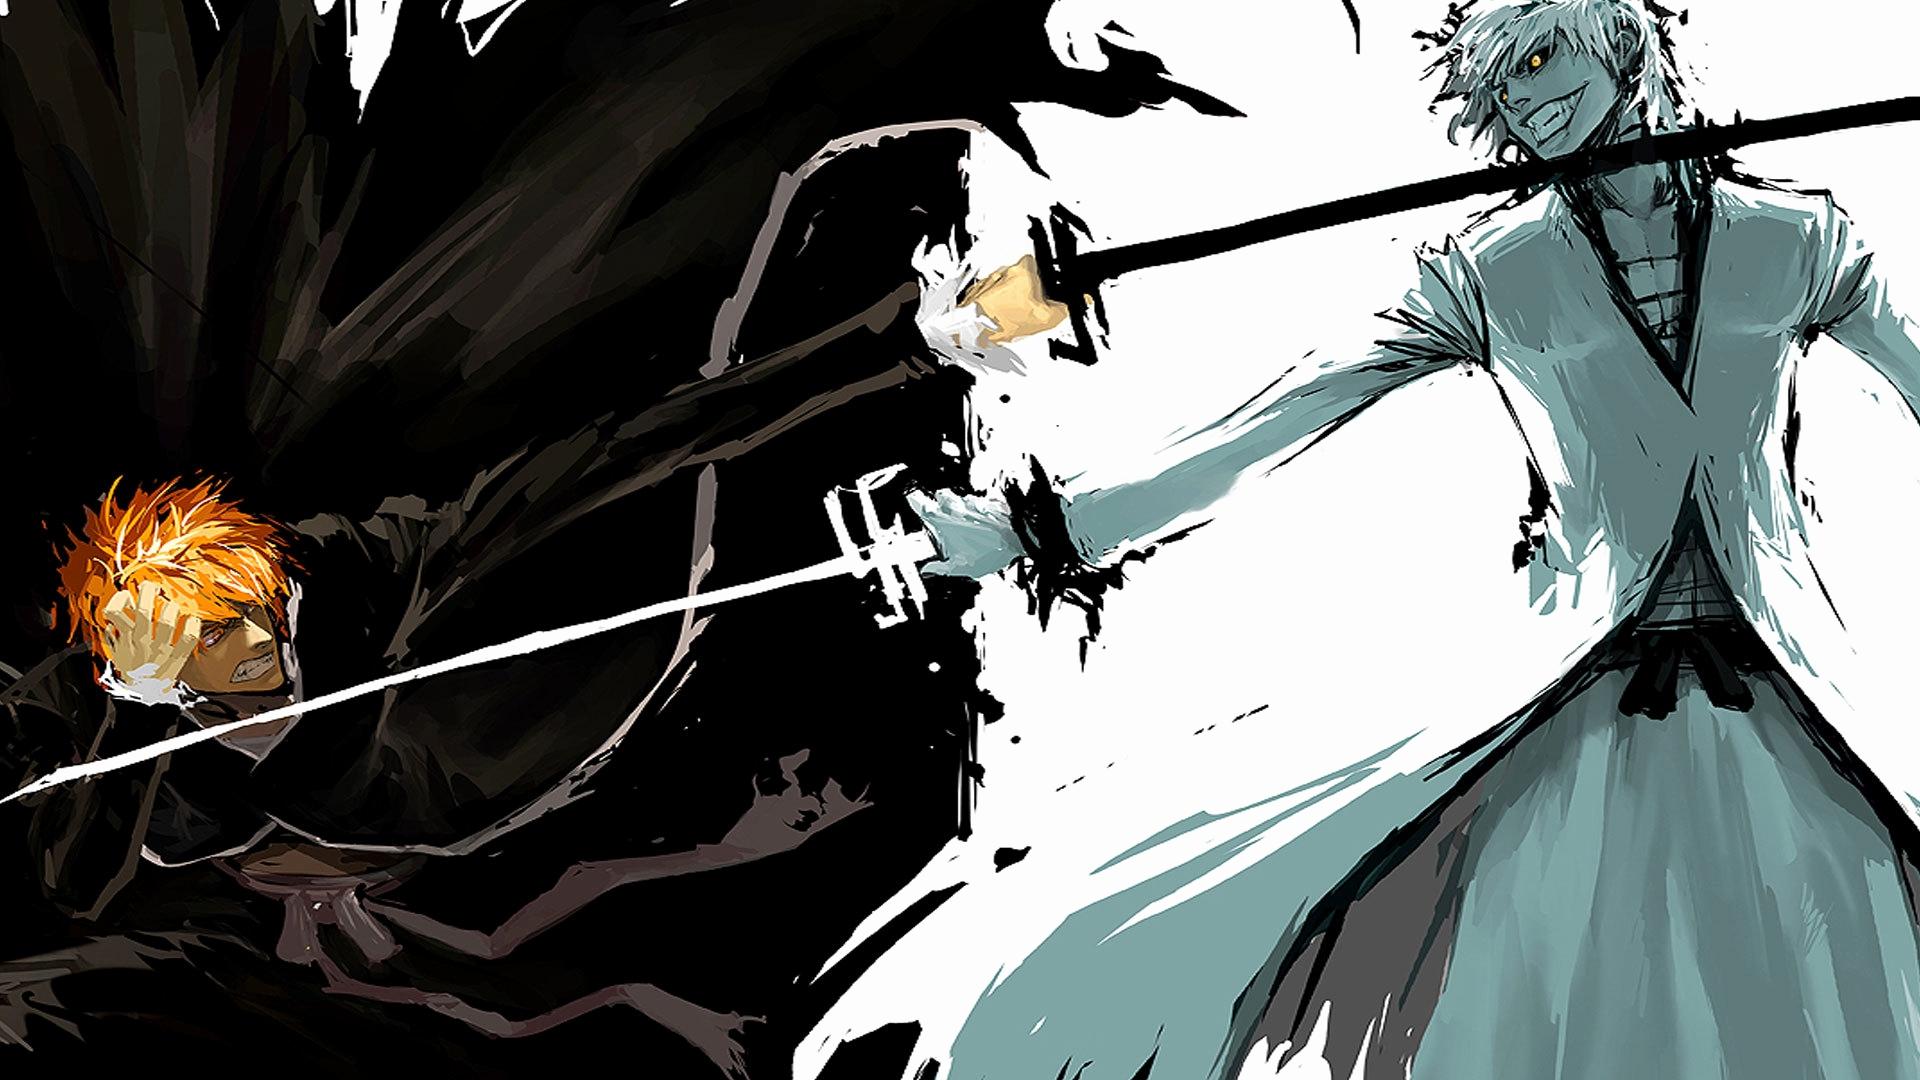 Bleach Anime Wallpaper Fresh 12 Best Anime Wallpaper In HD and 4k